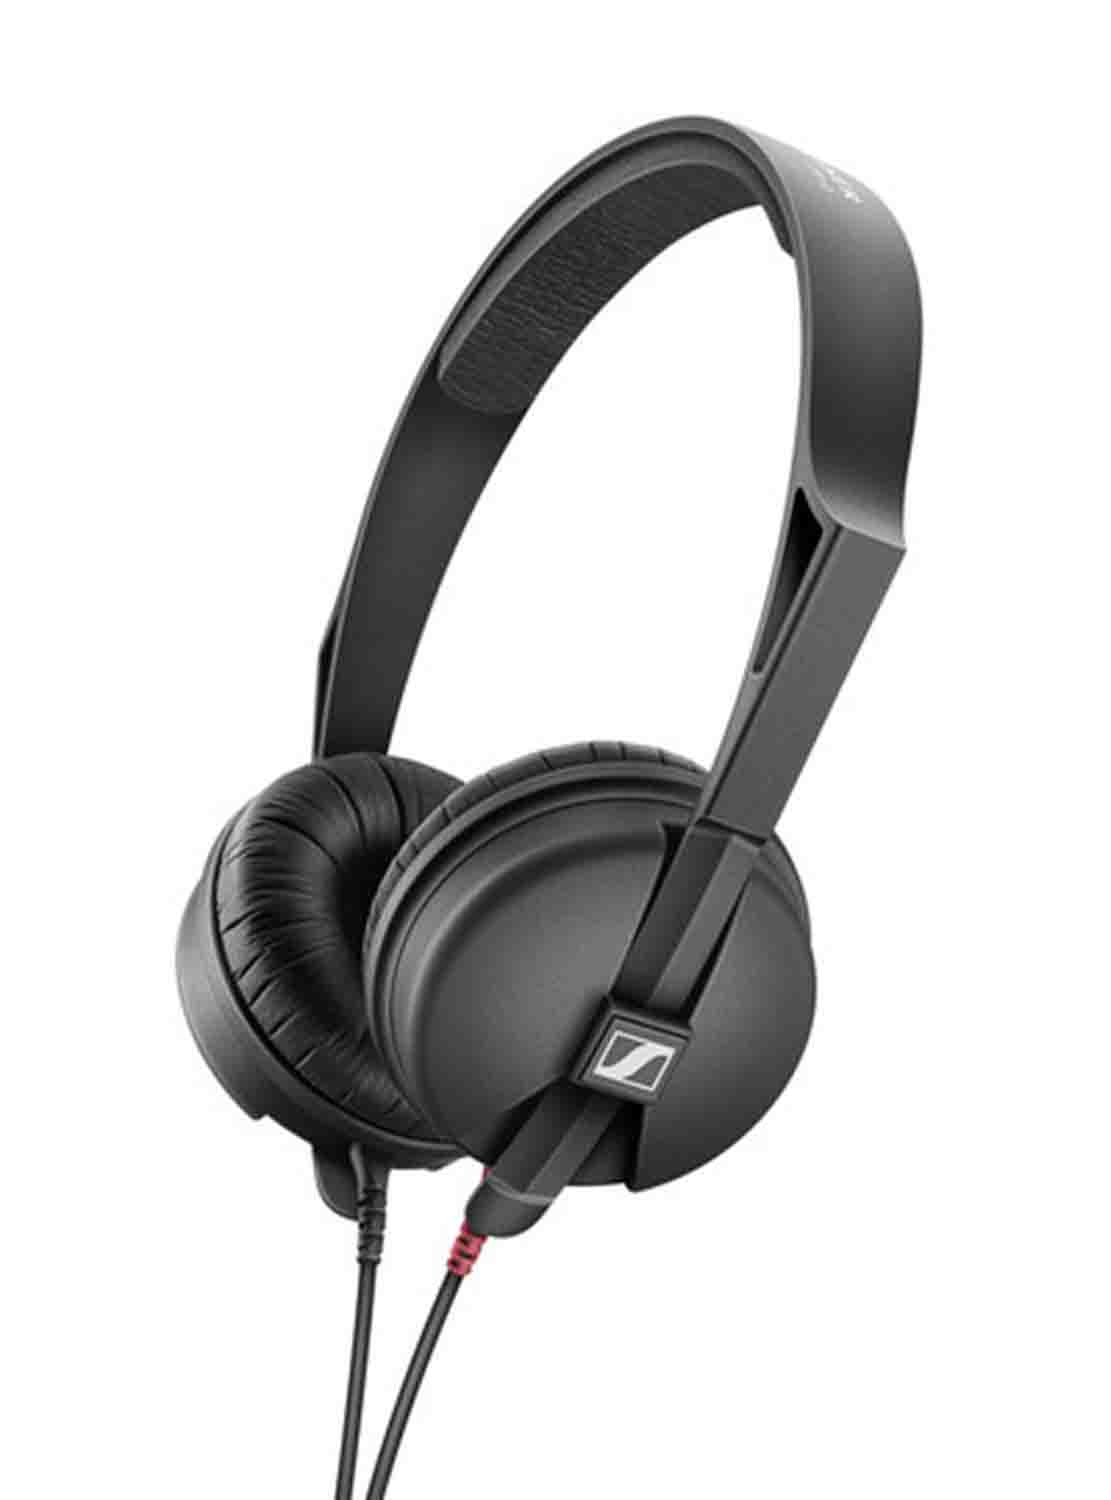 Sennheiser HD 25 LIGHT, Lightweight Closed-Back On-Ear Studio Headphones - Hollywood DJ